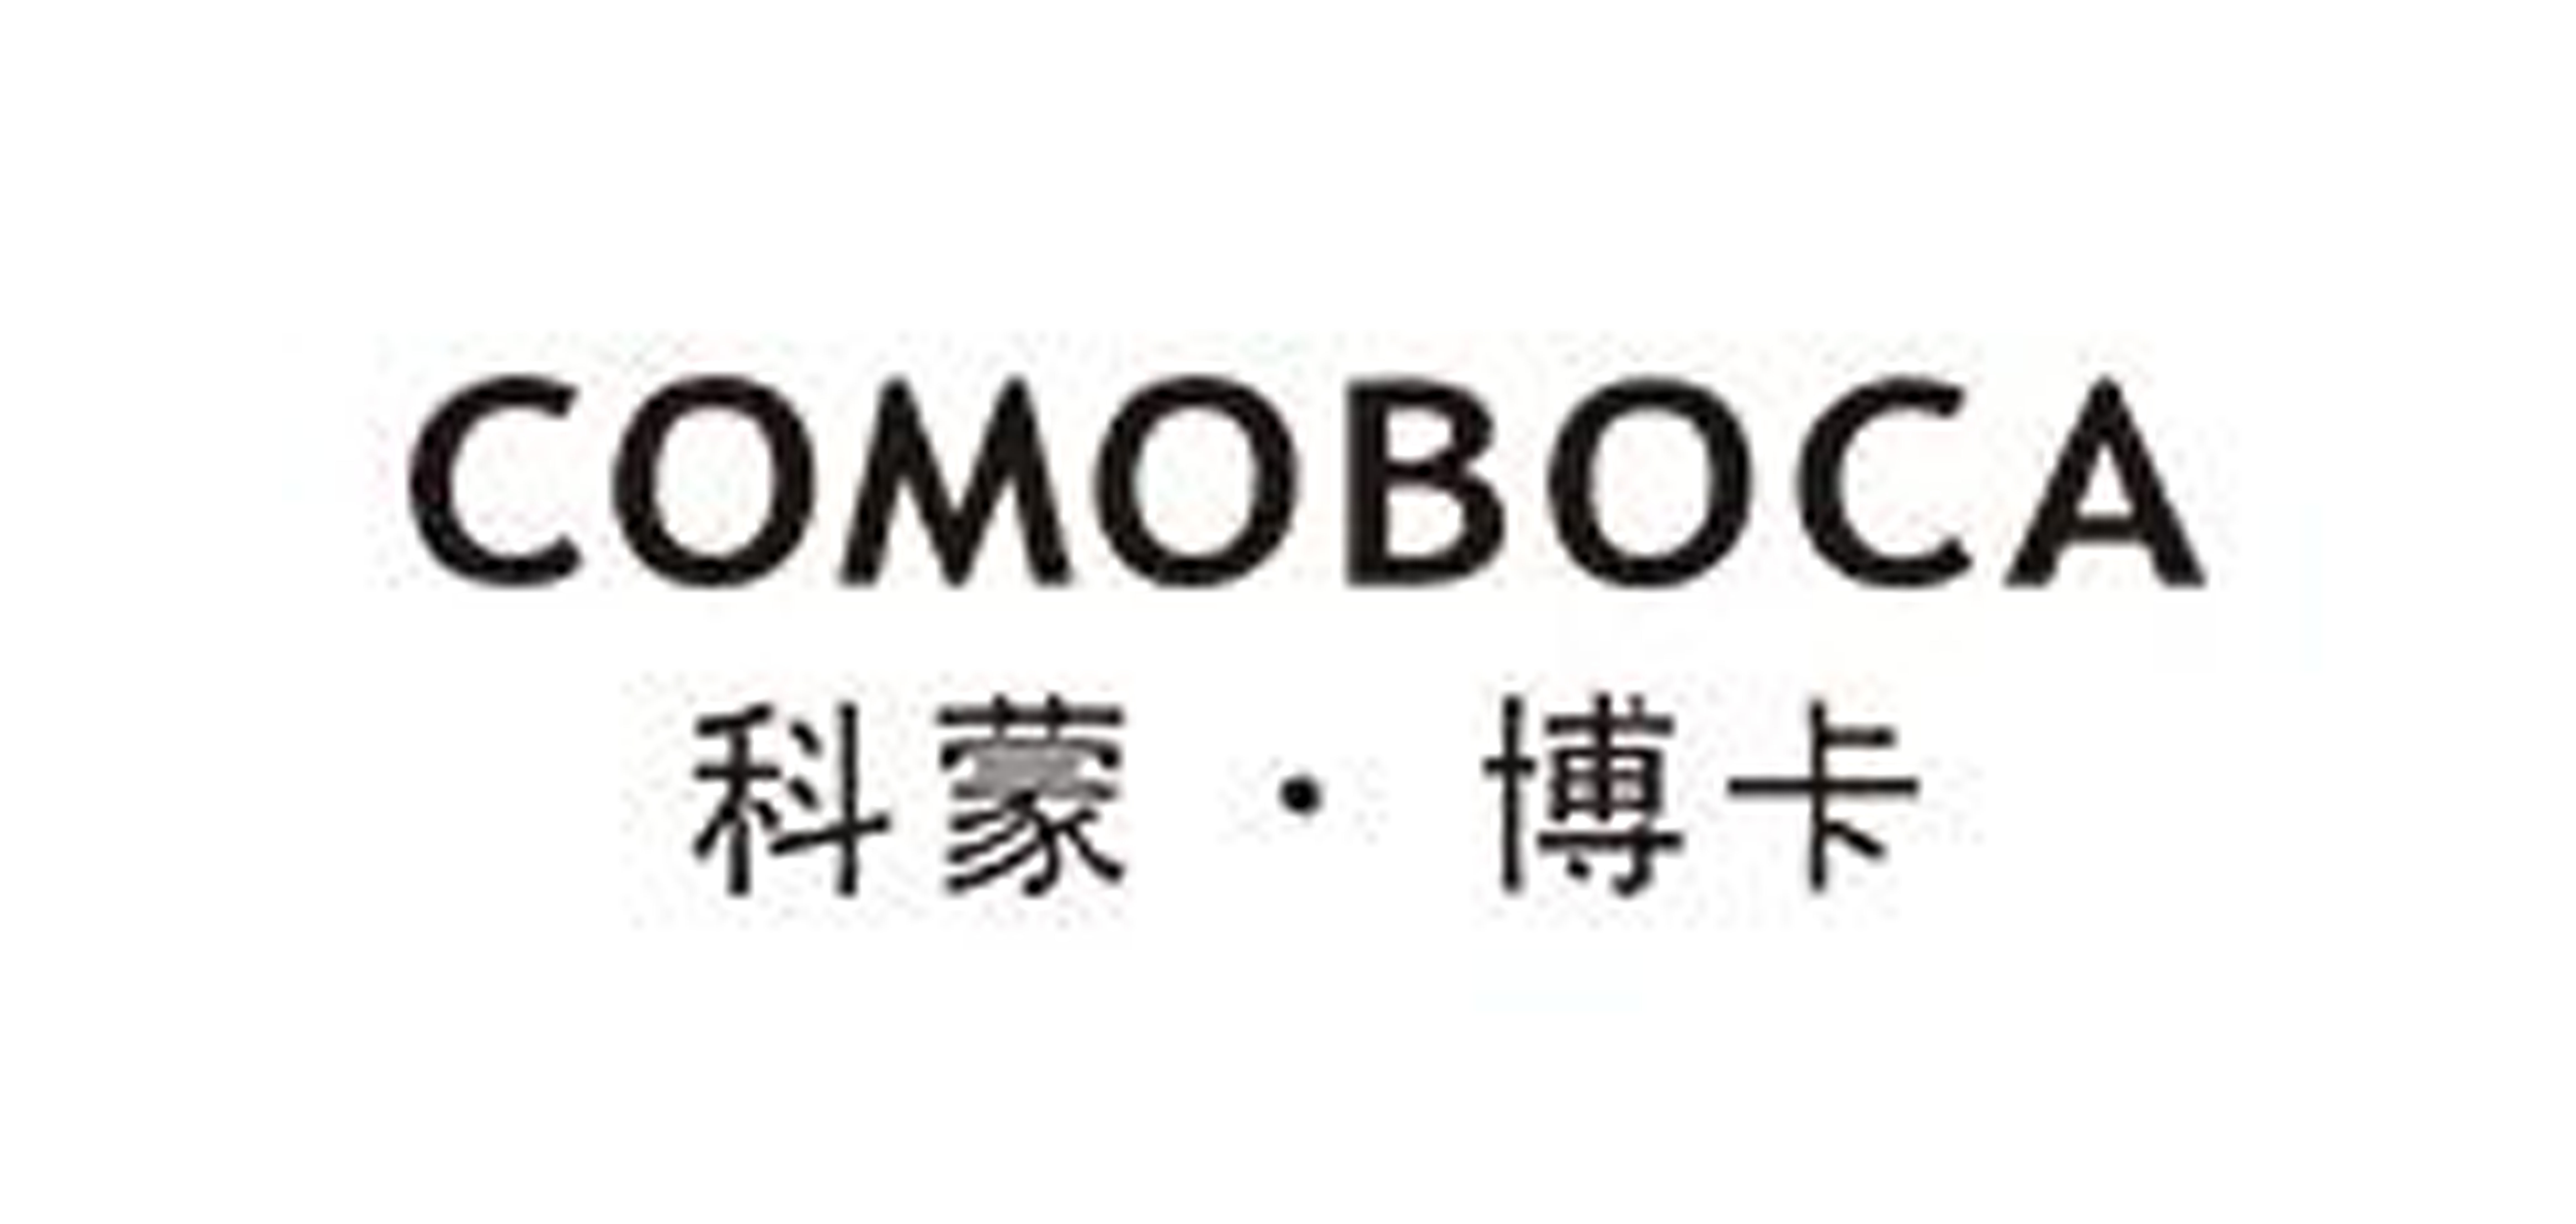 COMOBOCA是什么牌子_科蒙博卡品牌怎么样?